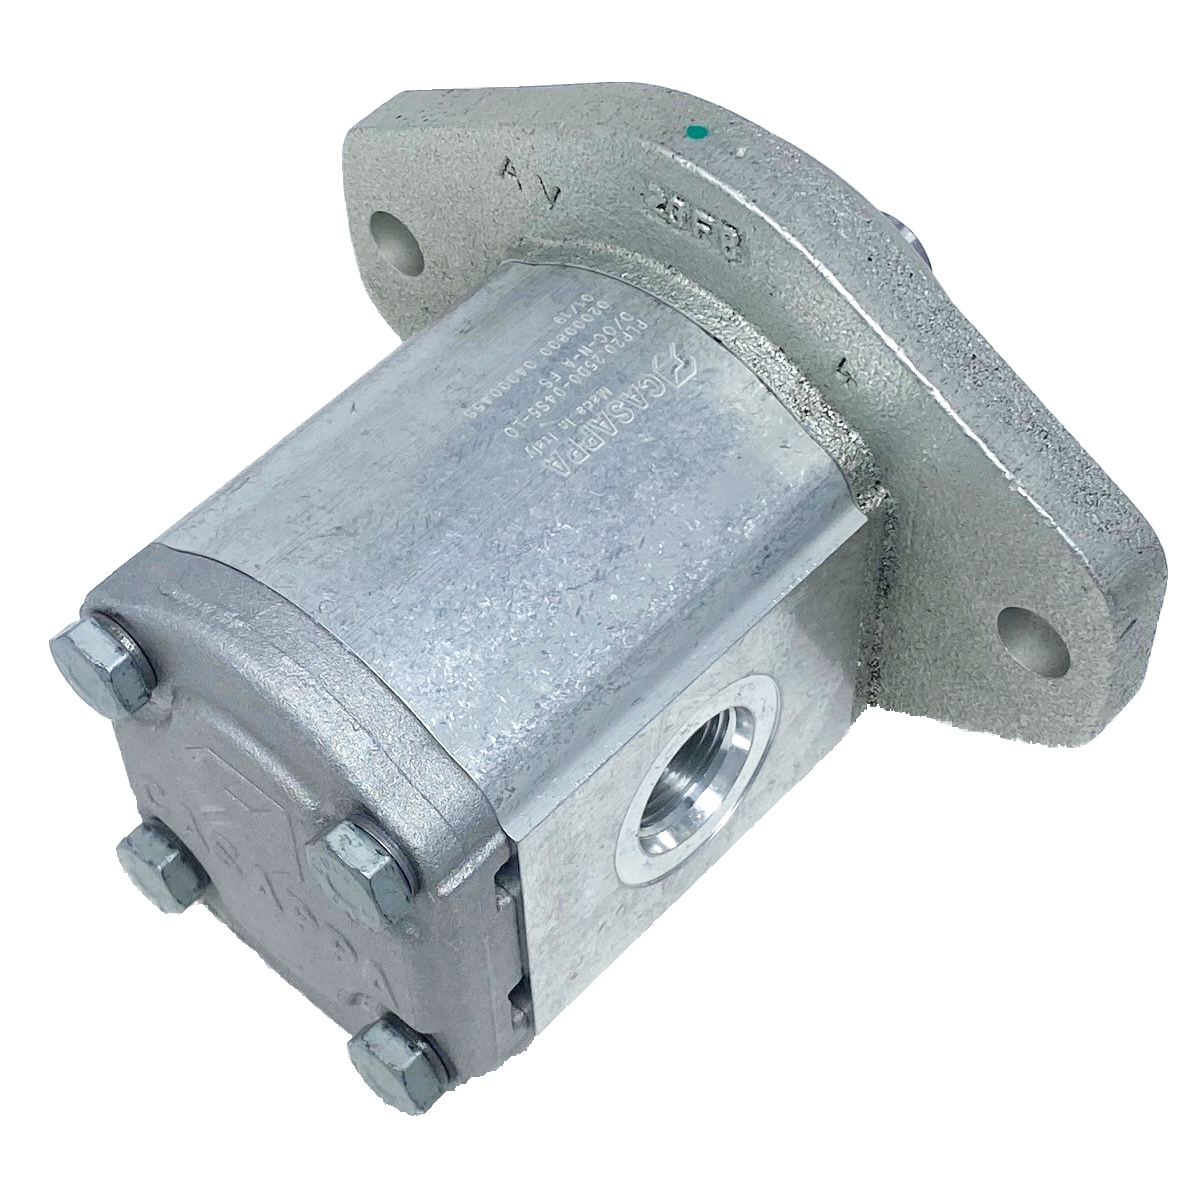 PLM20.31,5R0-32S5-LOC/OD-N-L : Casappa Polaris Gear Motor, 33.03cc, 1885psi, 2465RPM, Reversible, External Drain, 3/4" Bore x 1/4" Key Shaft, SAE B 2-Bolt Flange, 0.625 (5/8") #10 SAE In, 0.75 (3/4") #12 SAE Out, Aluminum Body, Cast Iron Flange